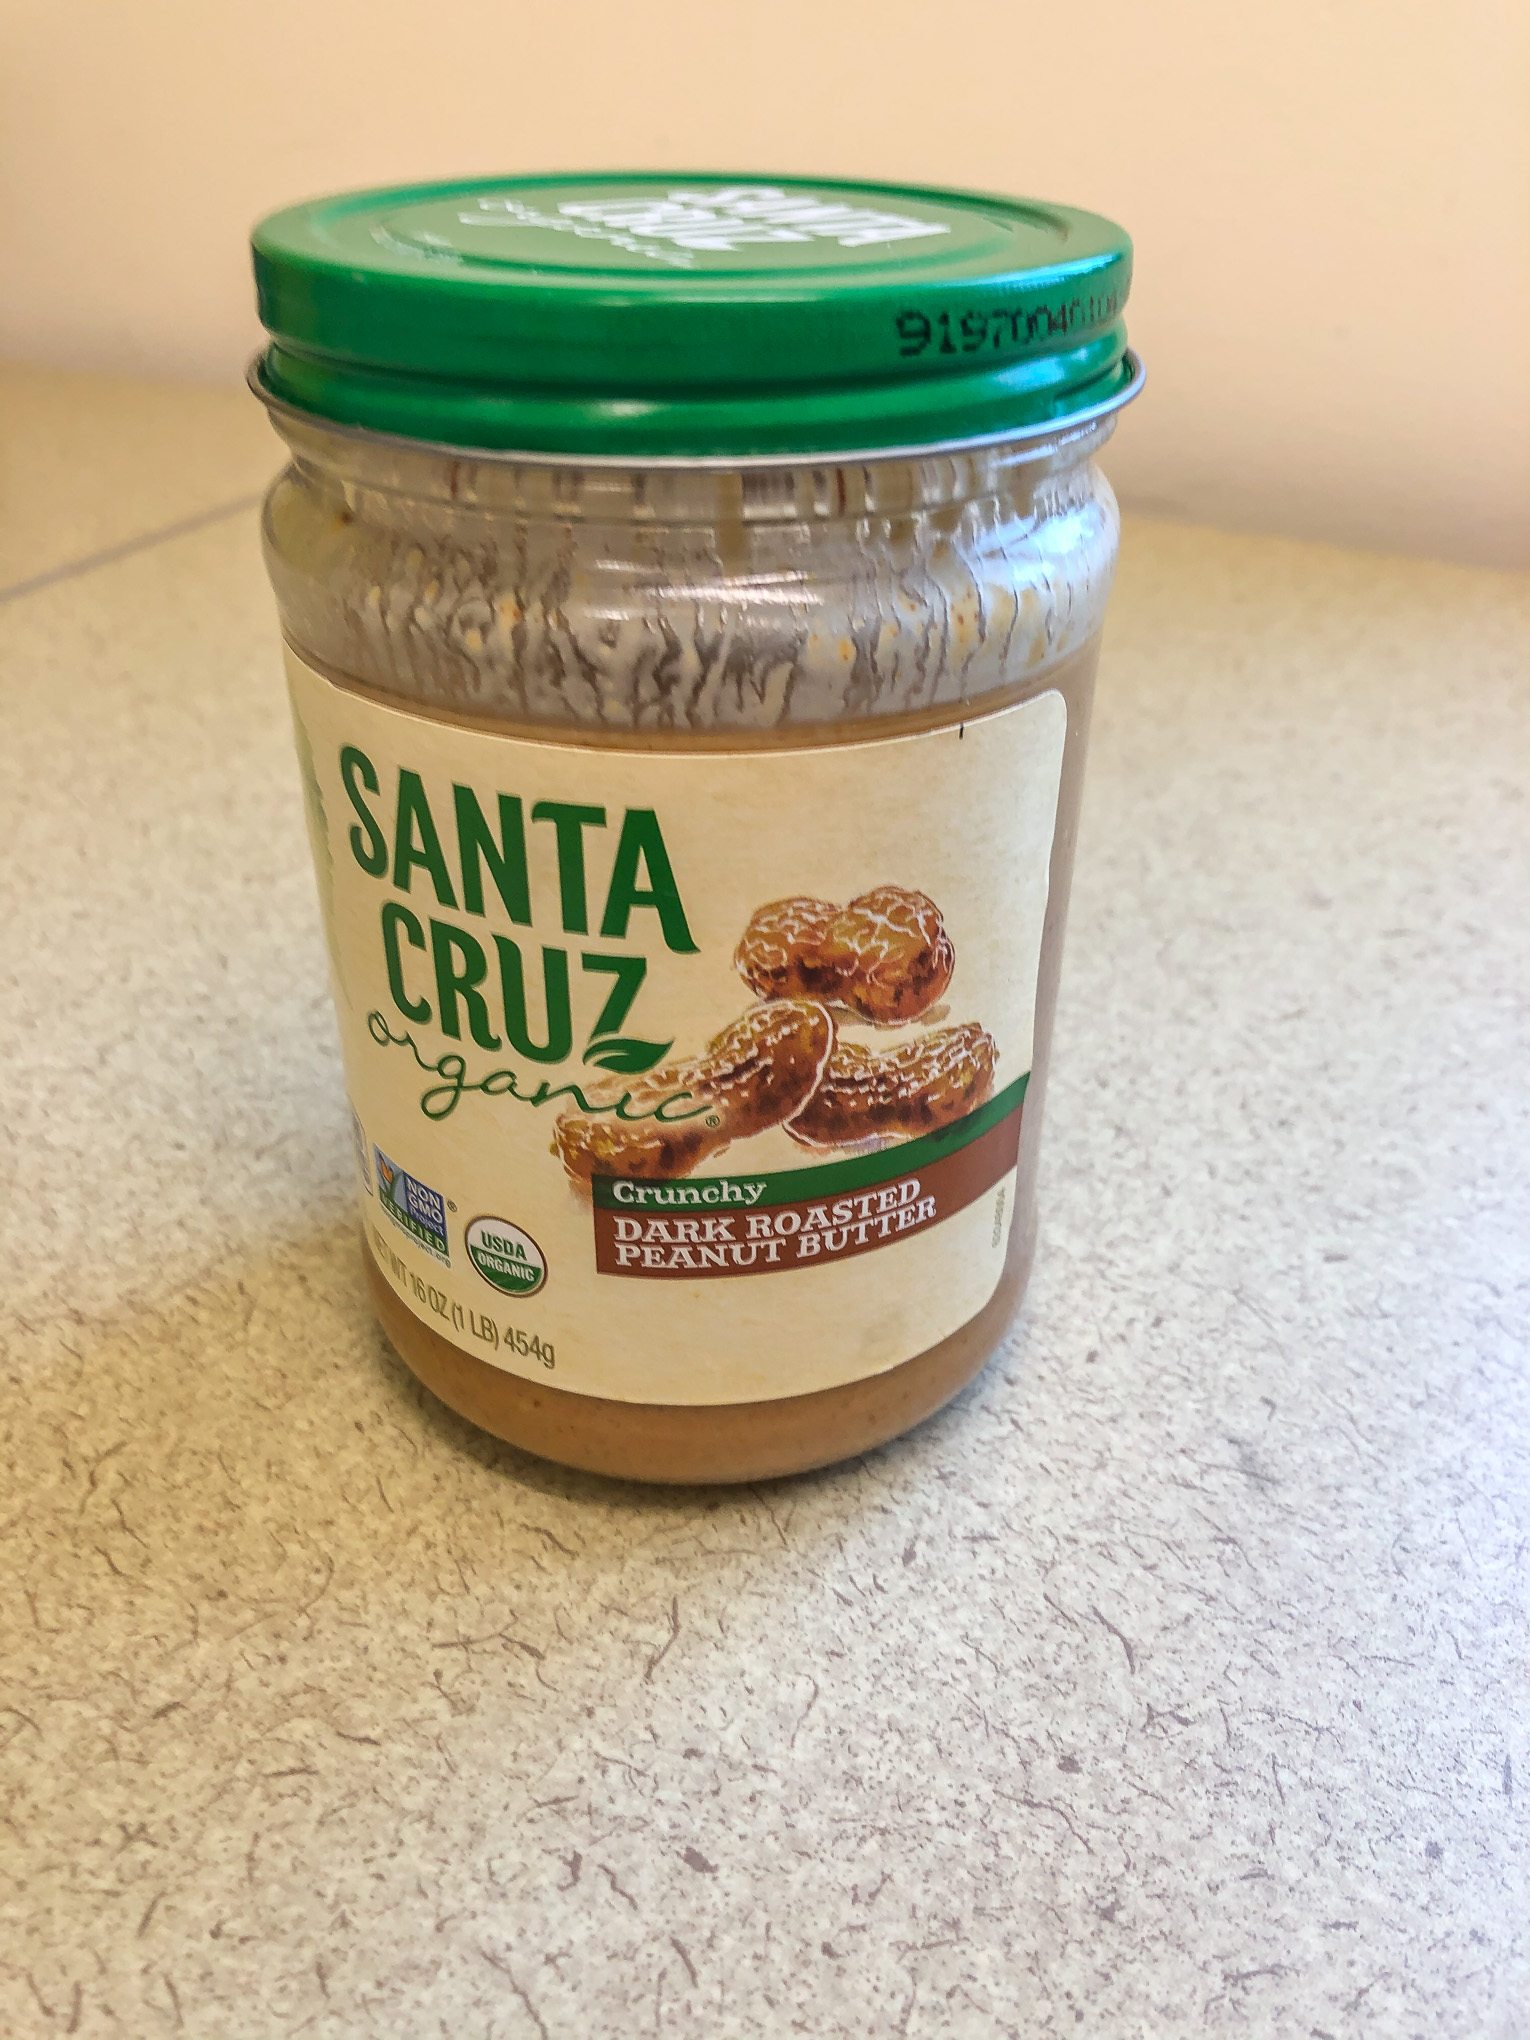 Jar of Santa Cruz peanut butter